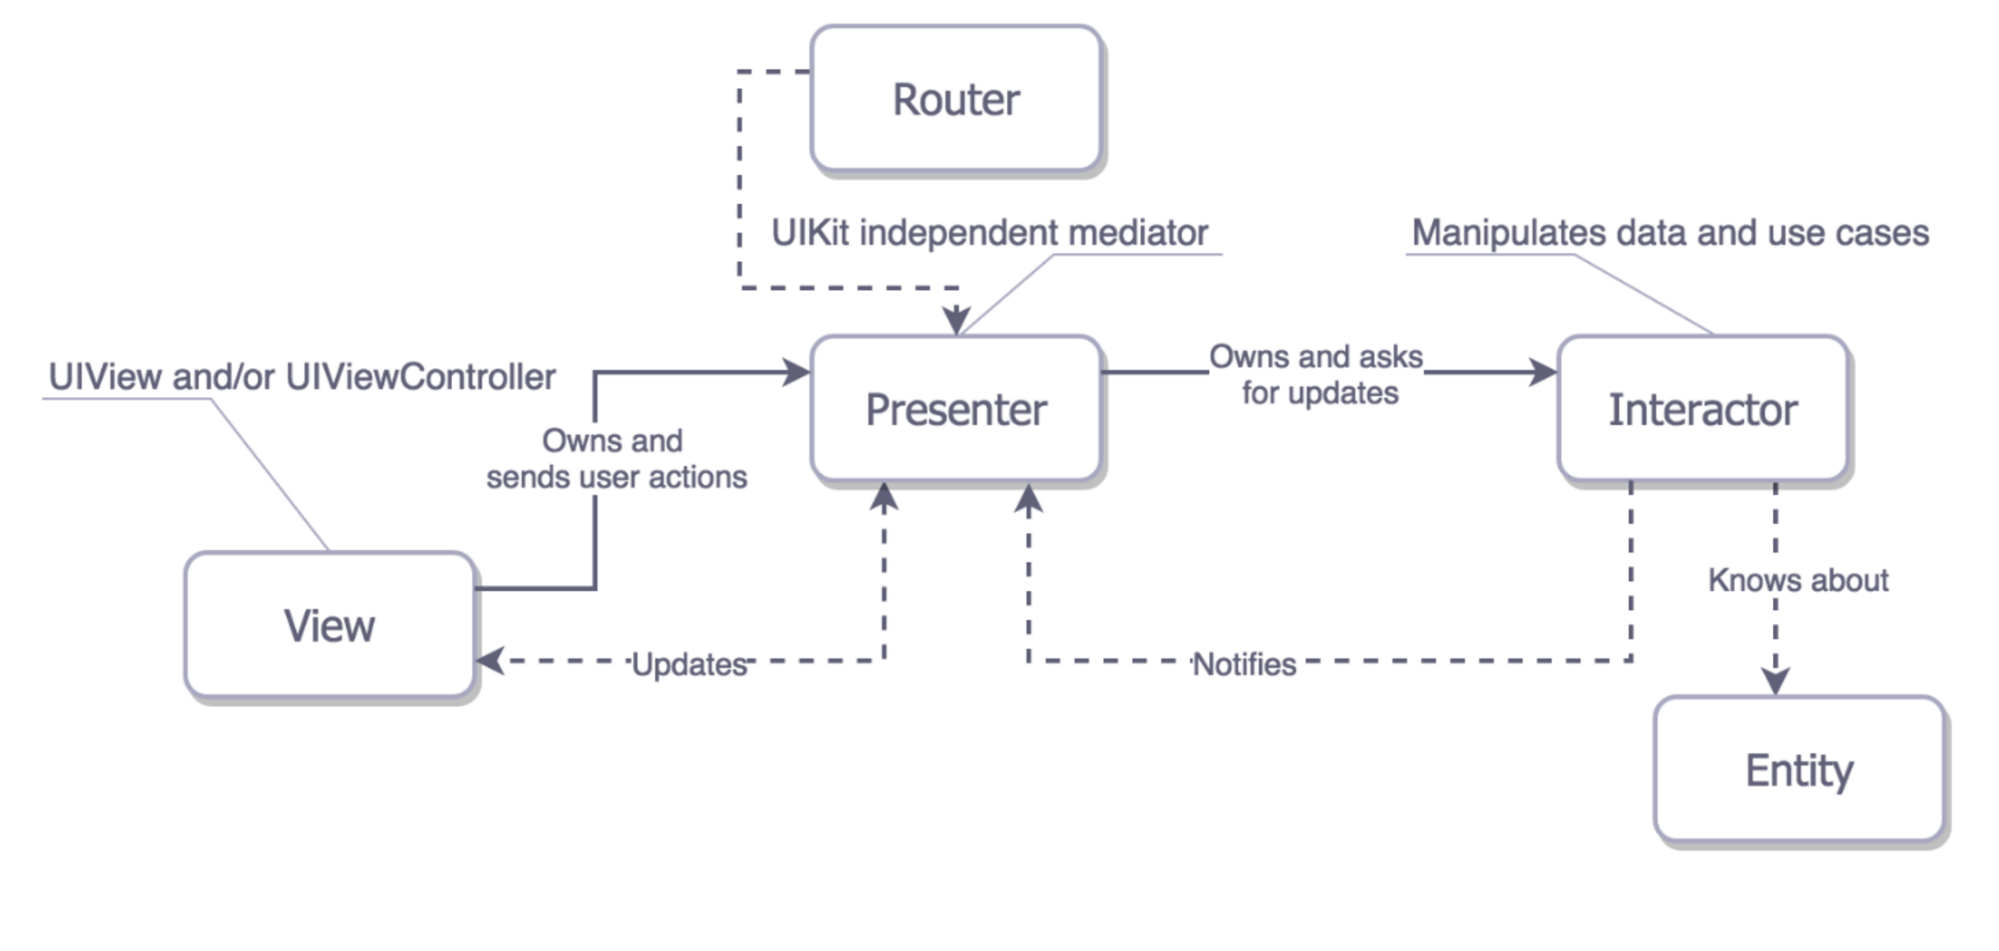 VIPER (View, Interactor, Presenter, Entity, Router)